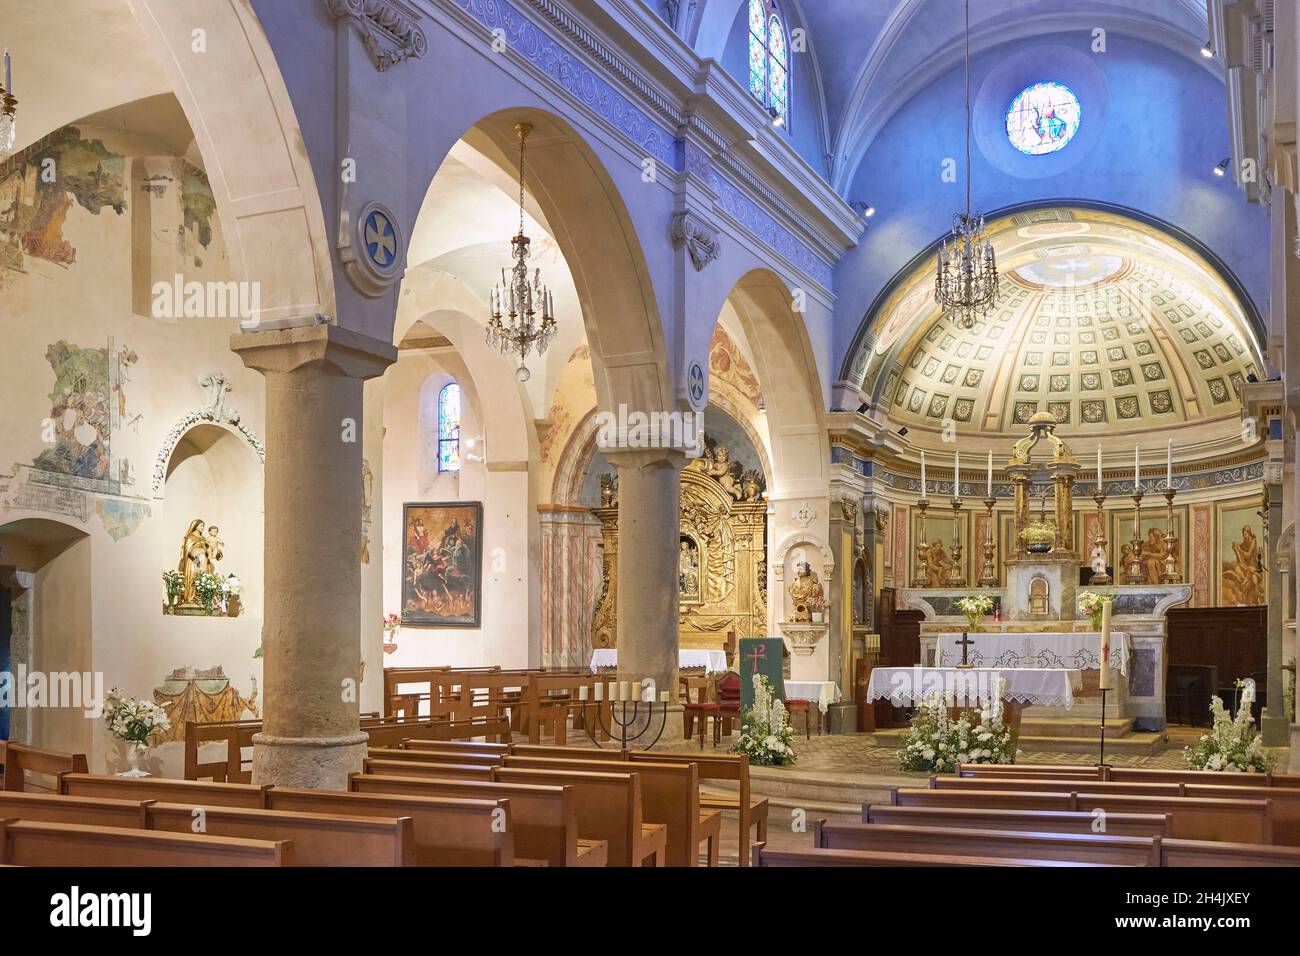 Francia, Alpes Maritimes, Biot, Coro y capillas laterales de la iglesia de Sainte Marie Madeleine Foto de stock